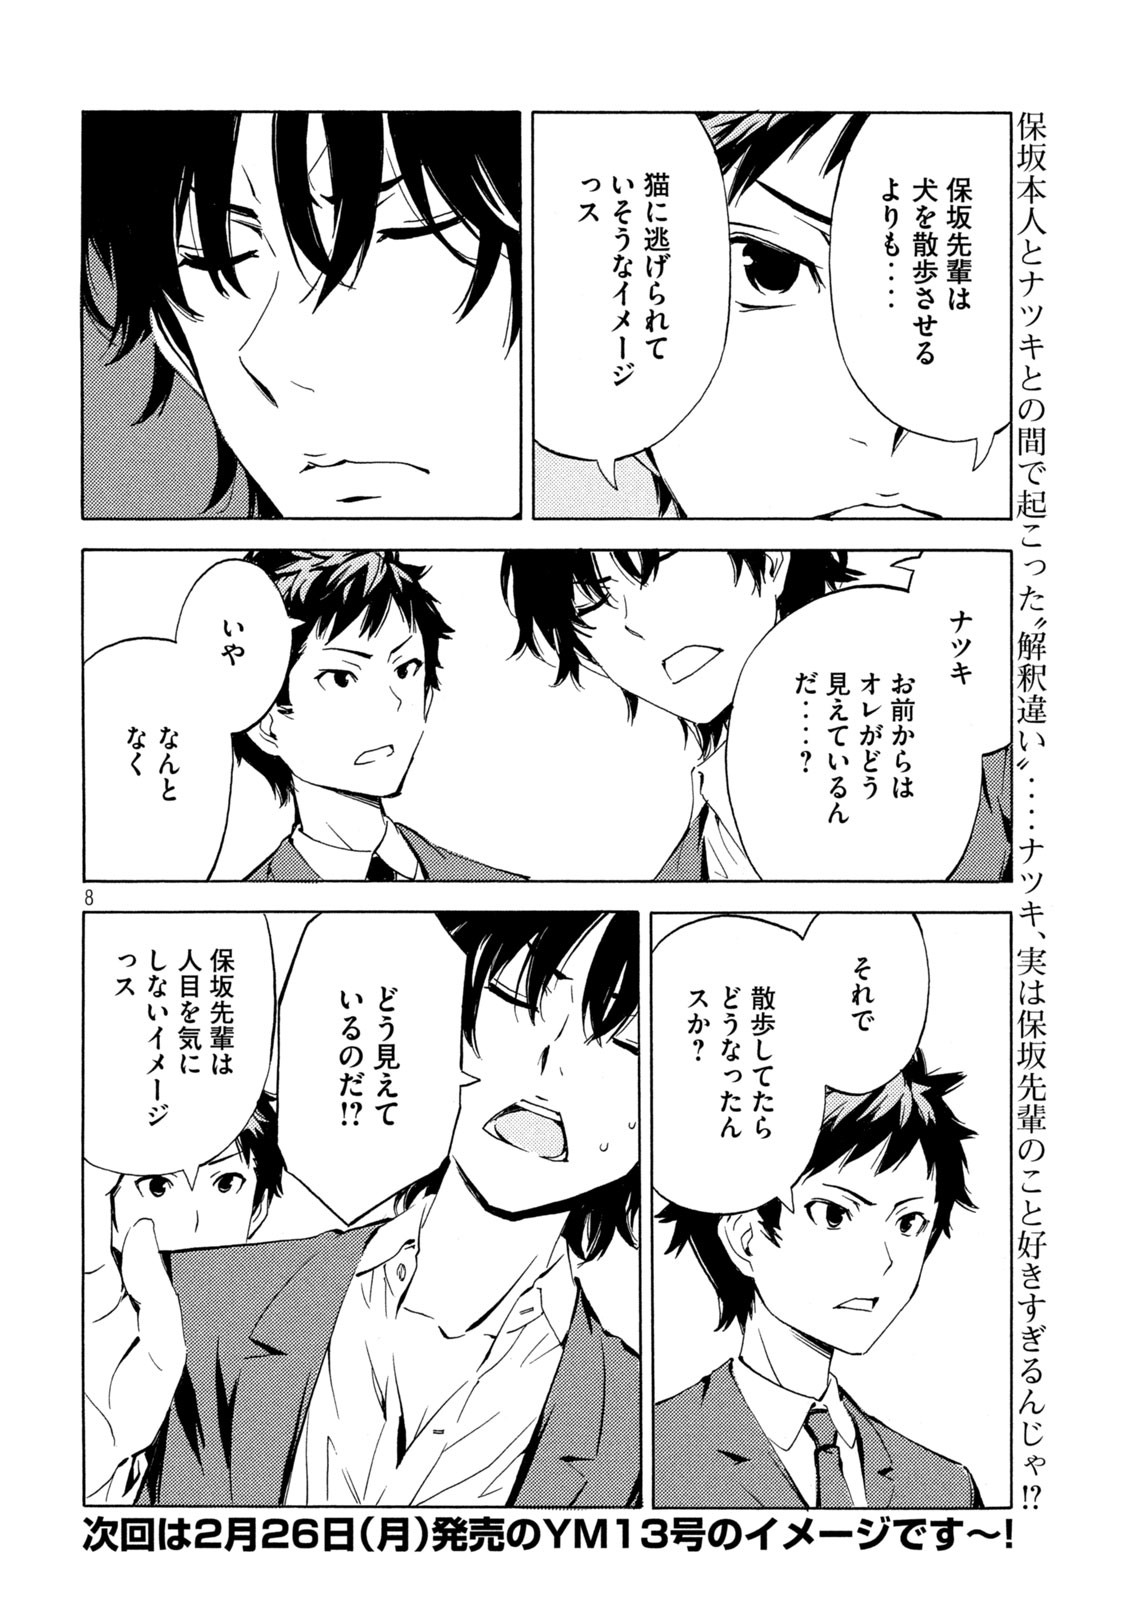 Minami-ke - Chapter 478 - Page 8